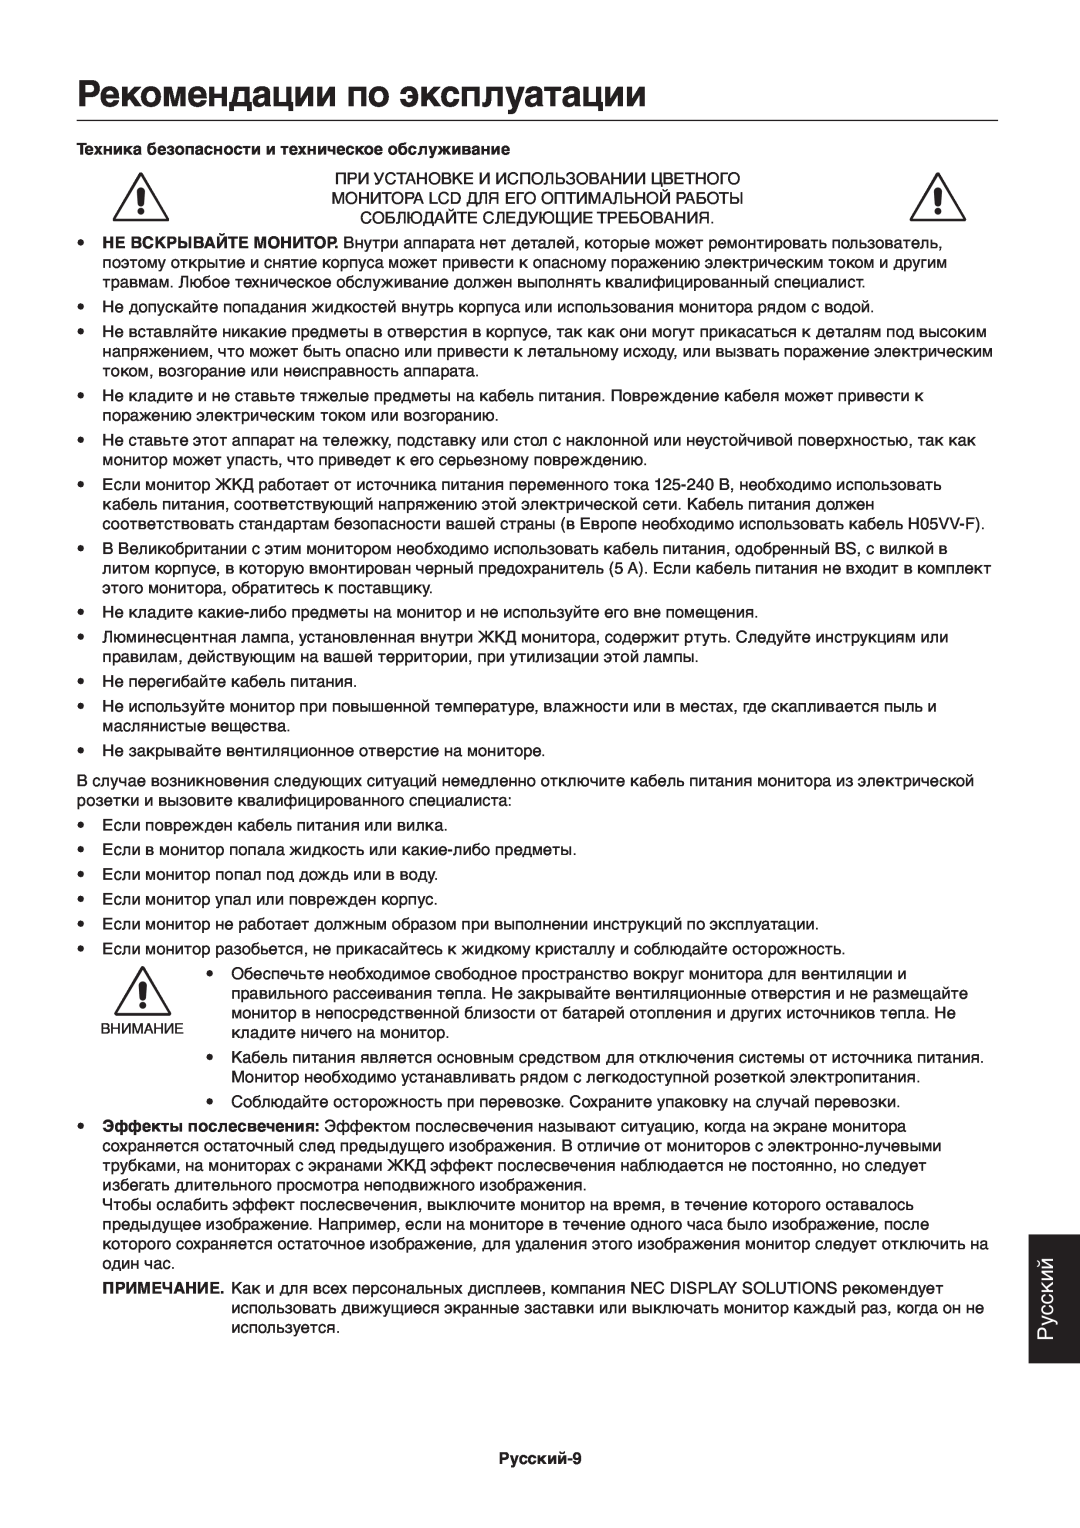 NEC ACCUSYNC LCD73V manual Рекомендации по эксплуатации, Техника безопасности и техническое обслуживание, Русский-9 